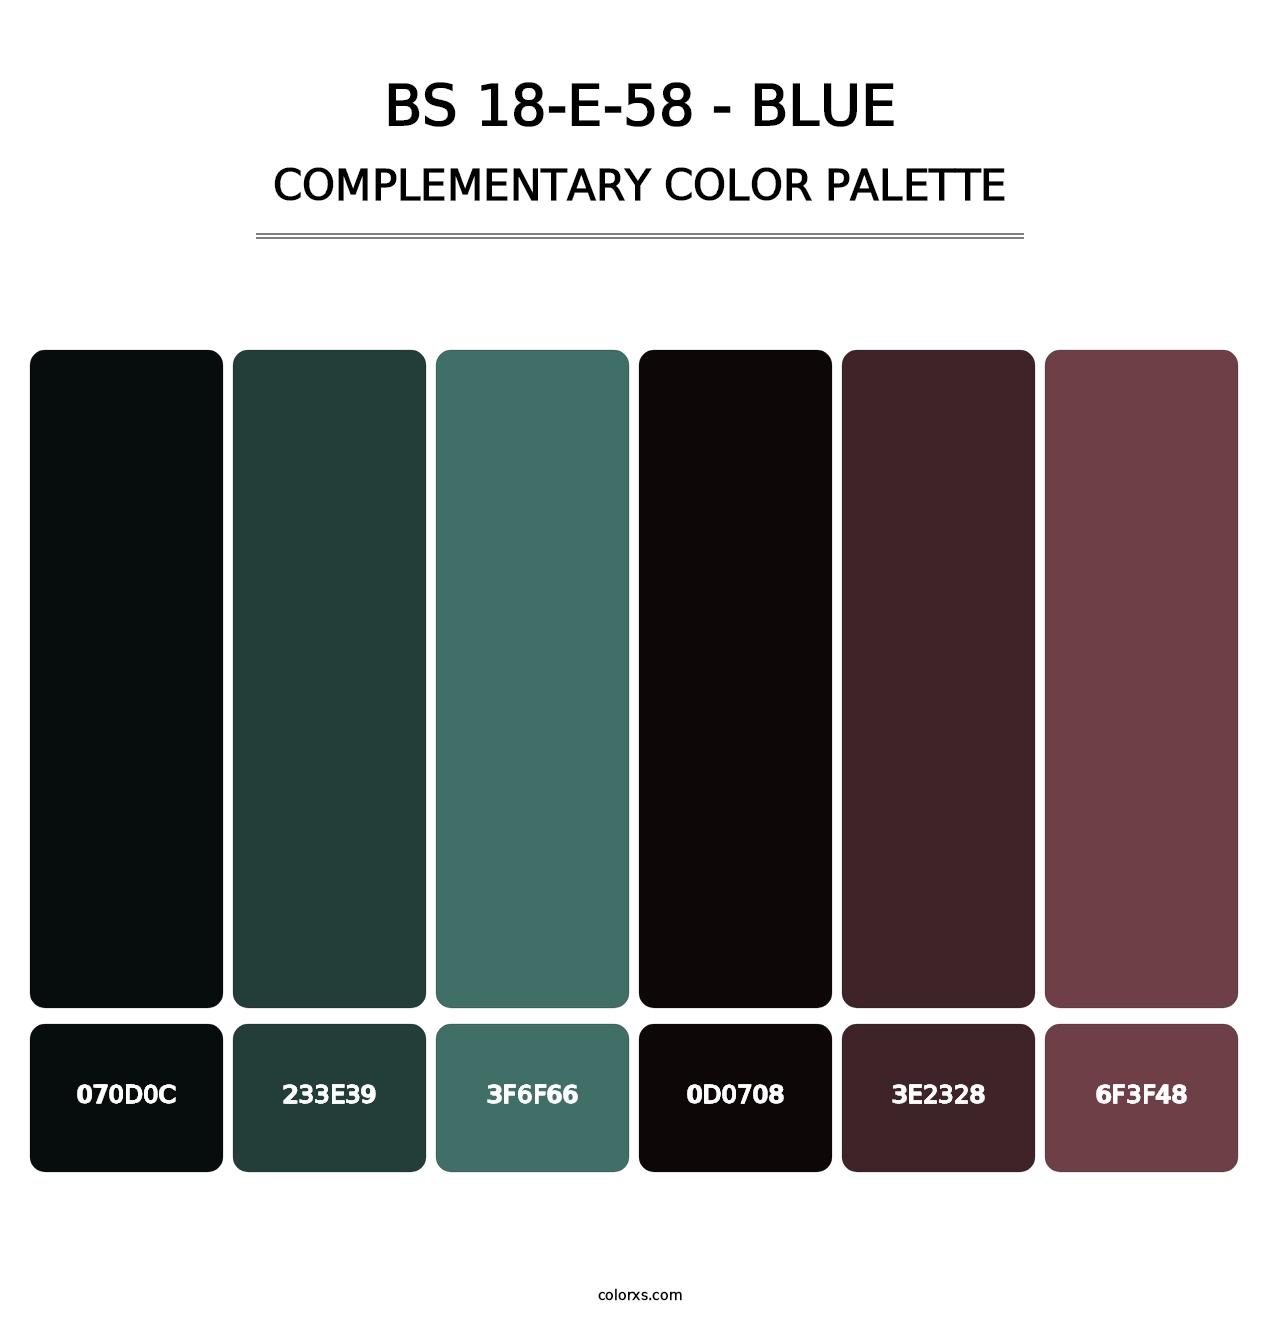 BS 18-E-58 - Blue - Complementary Color Palette